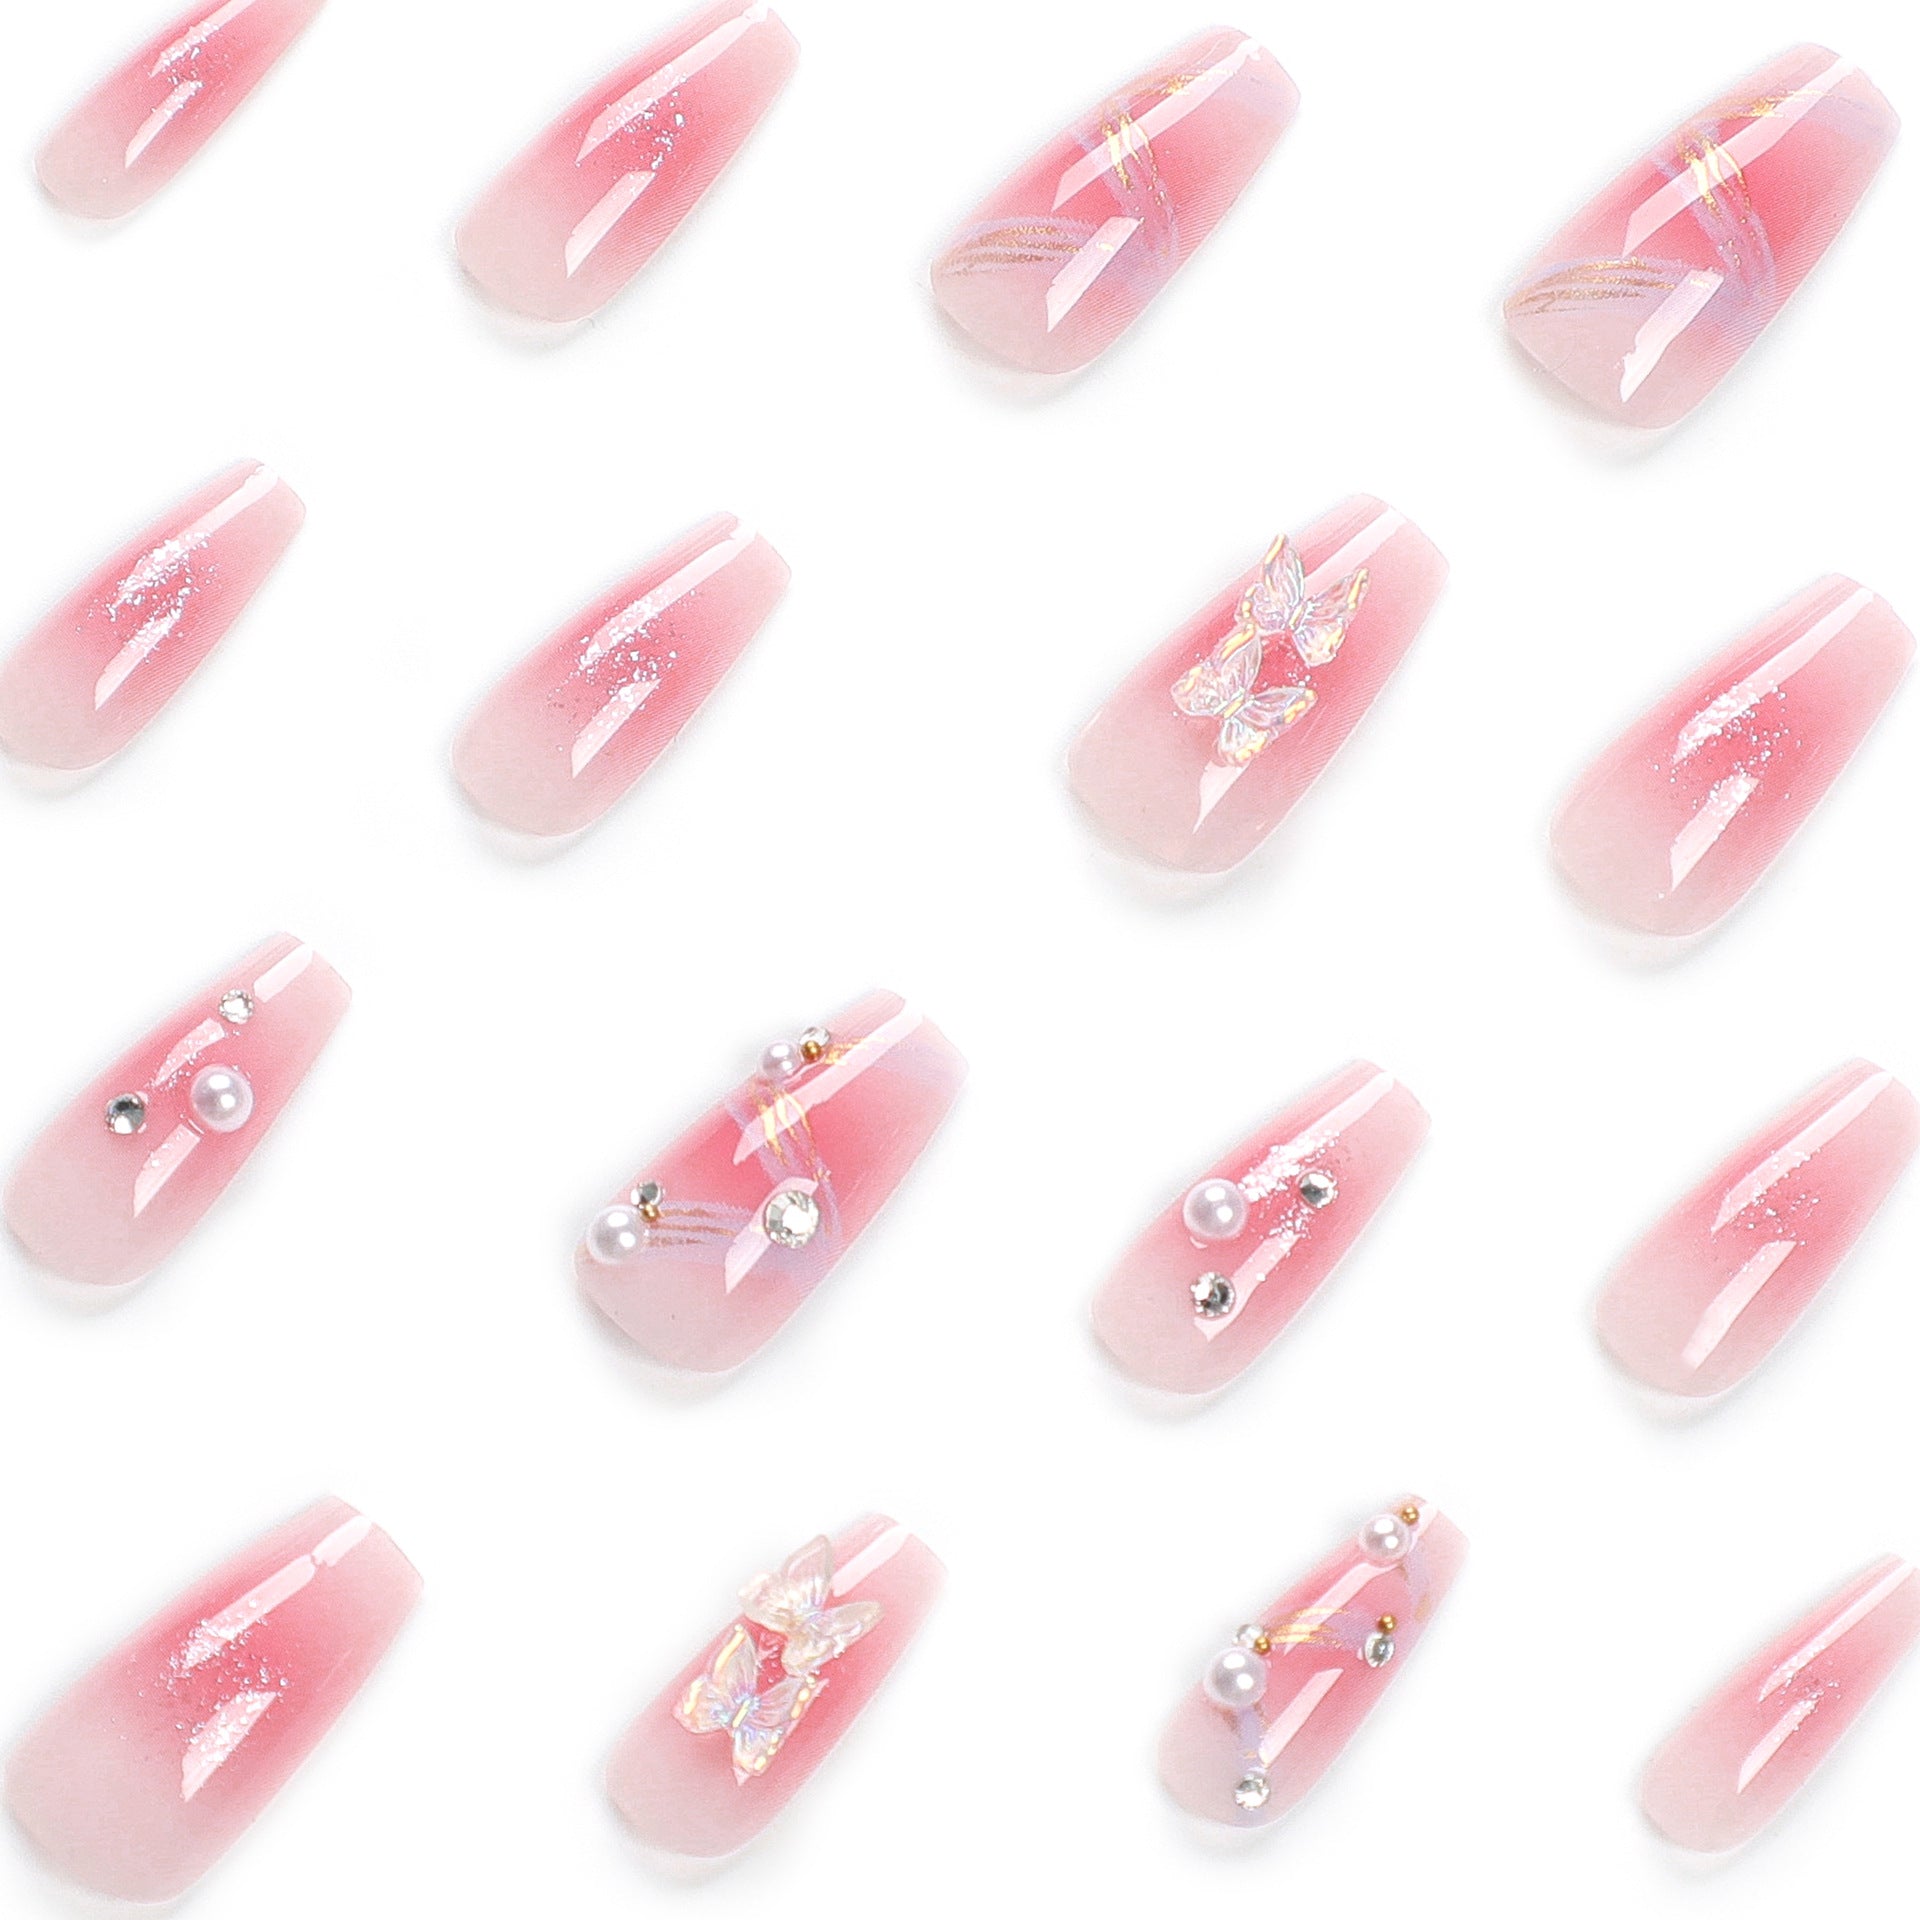 Stylish Pink Nails | Decorative Pink Nails | Galspro